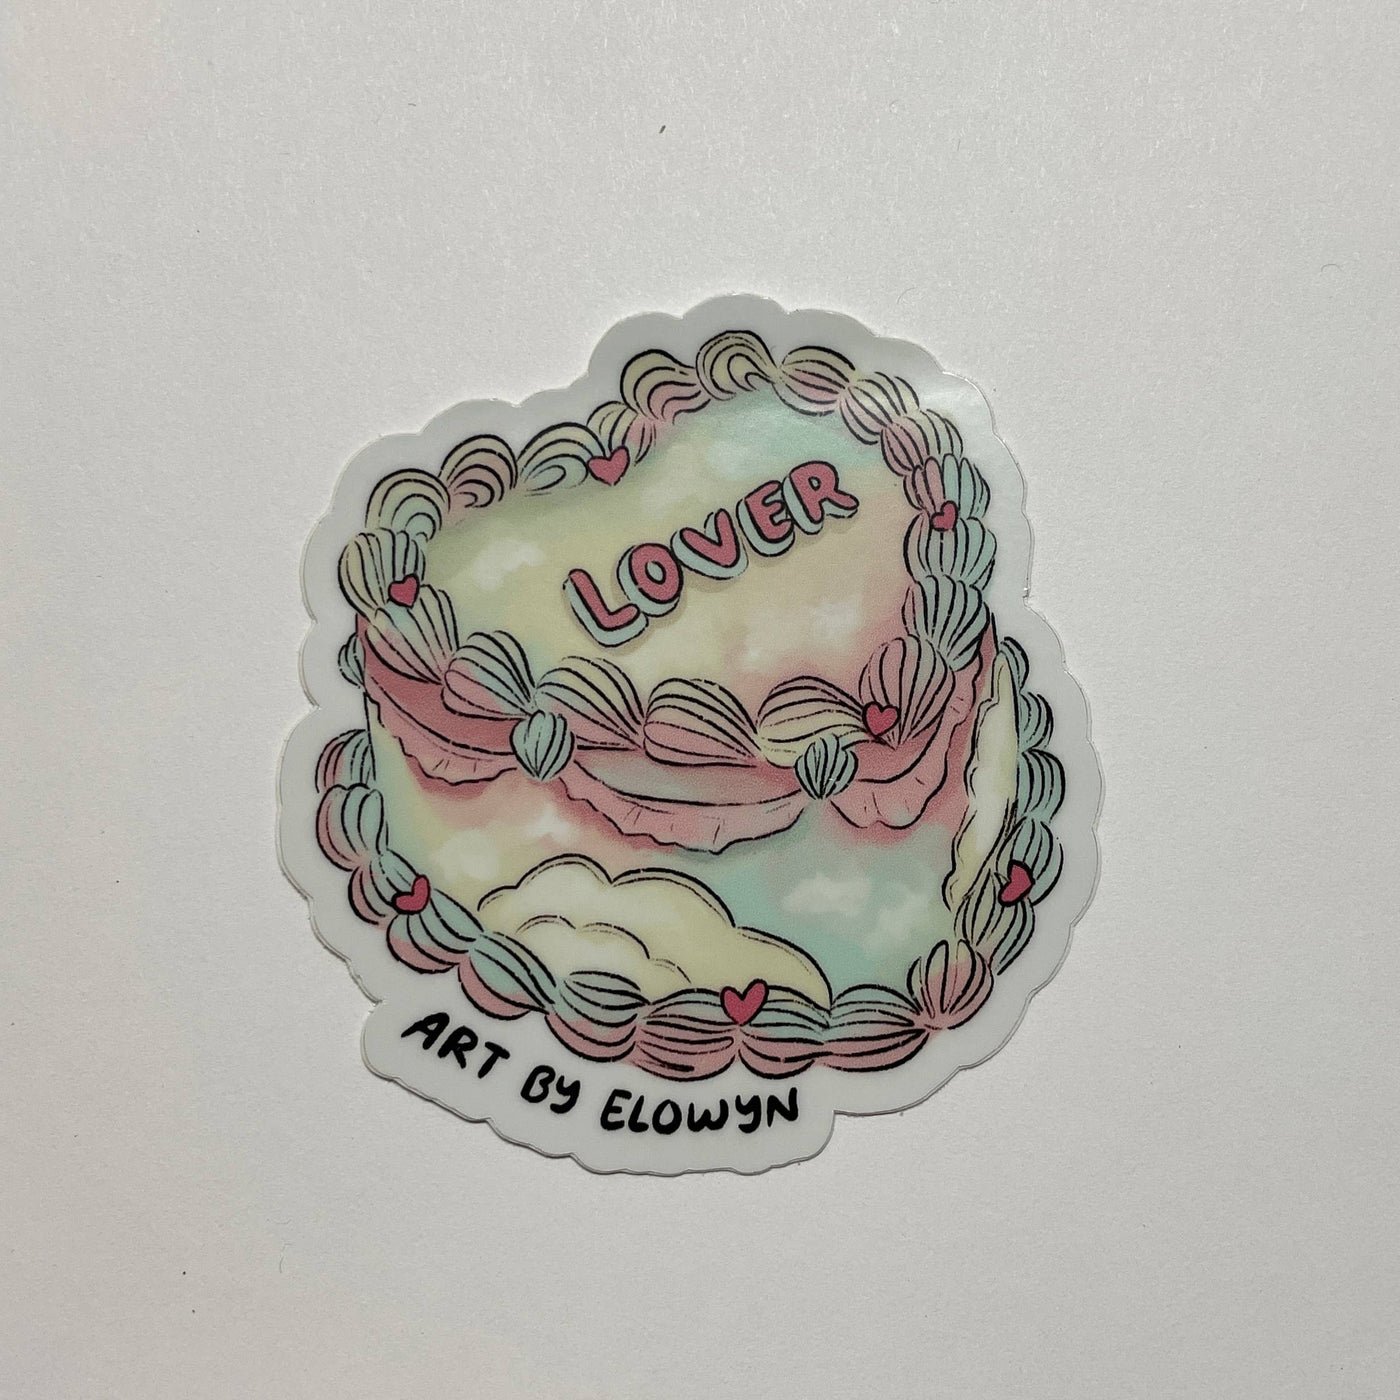 Eras Cakes: 1989 Sticker